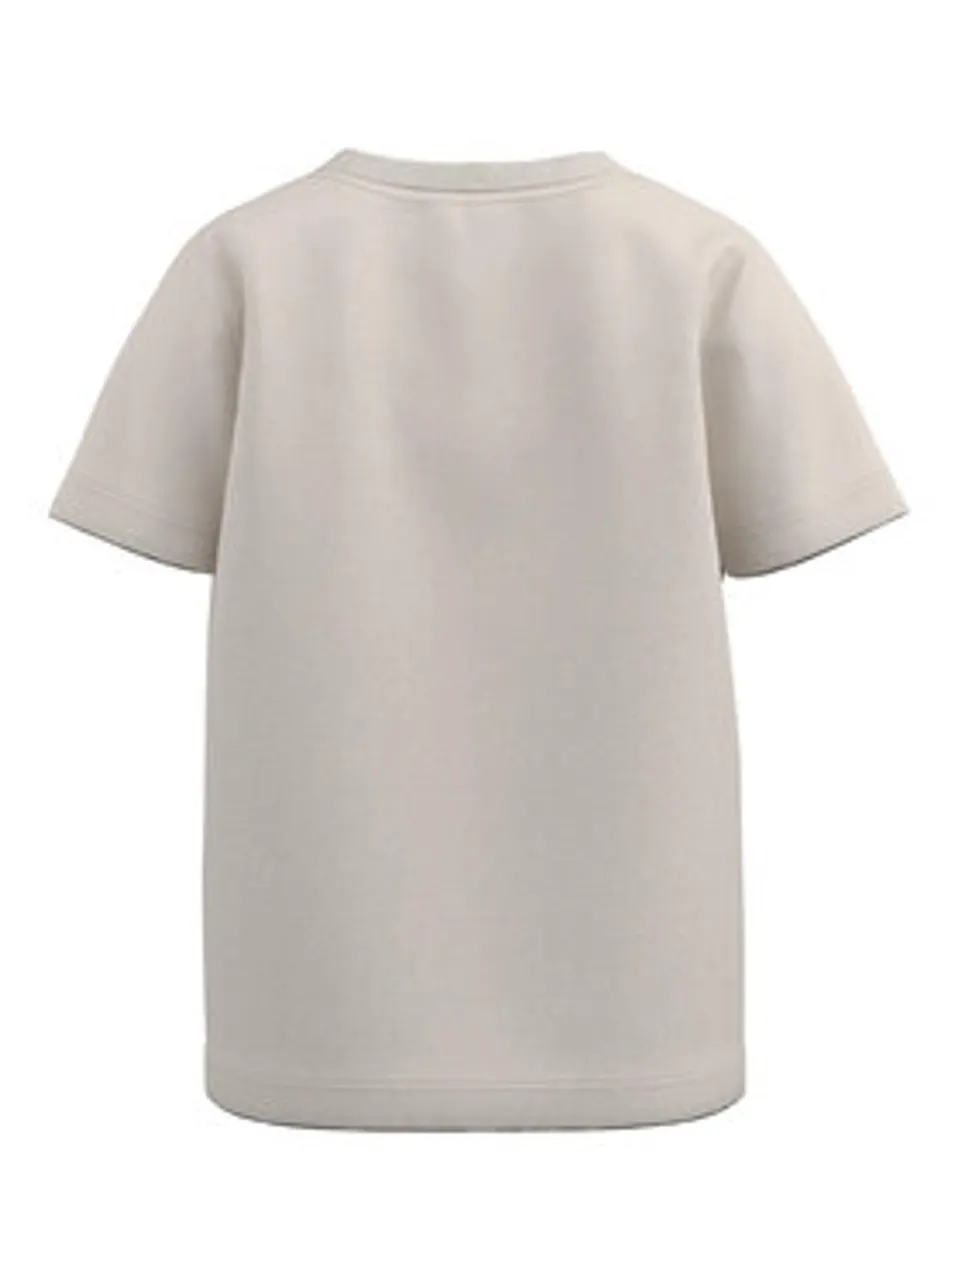 NAME IT T-Shirt 13213269 Weiß Regular Fit